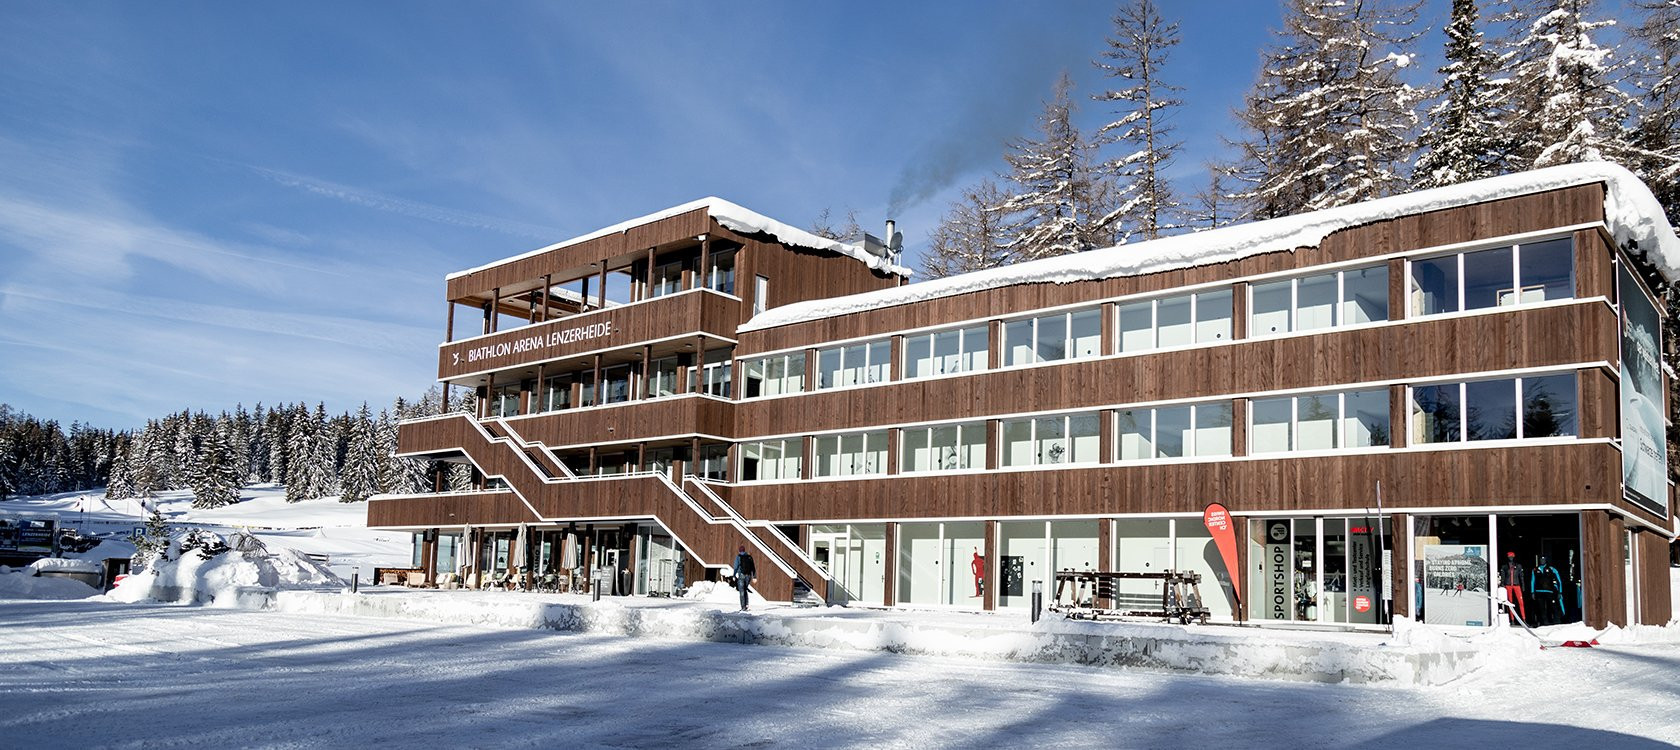 Swiss-Ski announce plans to turn Lenzerheide into "biathlon hot-spot"